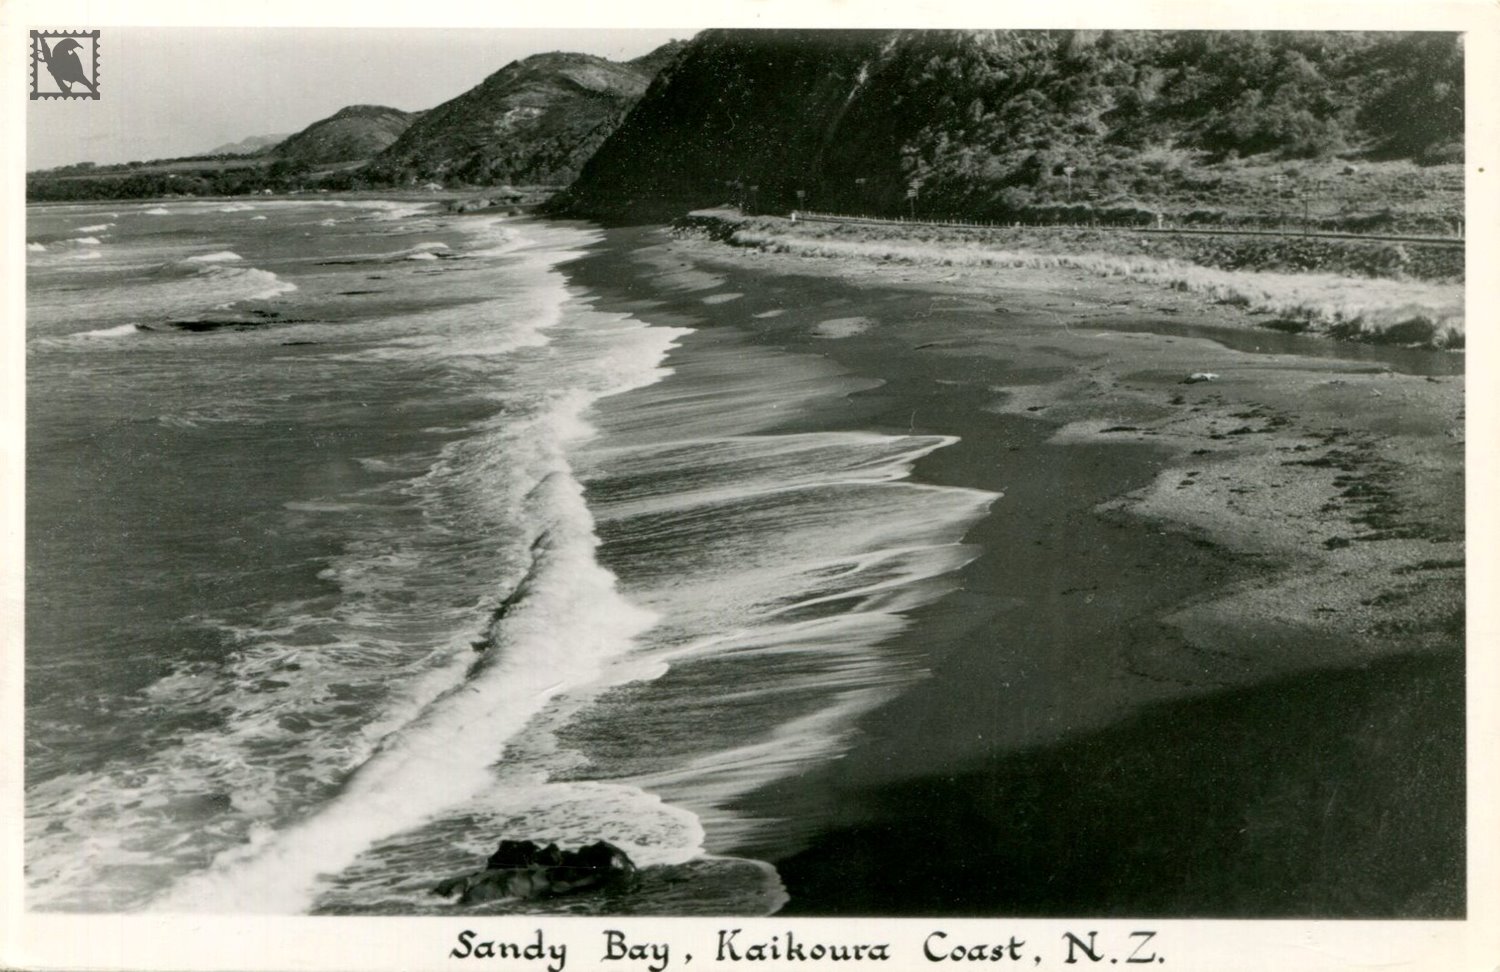 Kaikoura Coast - Sandy Bay